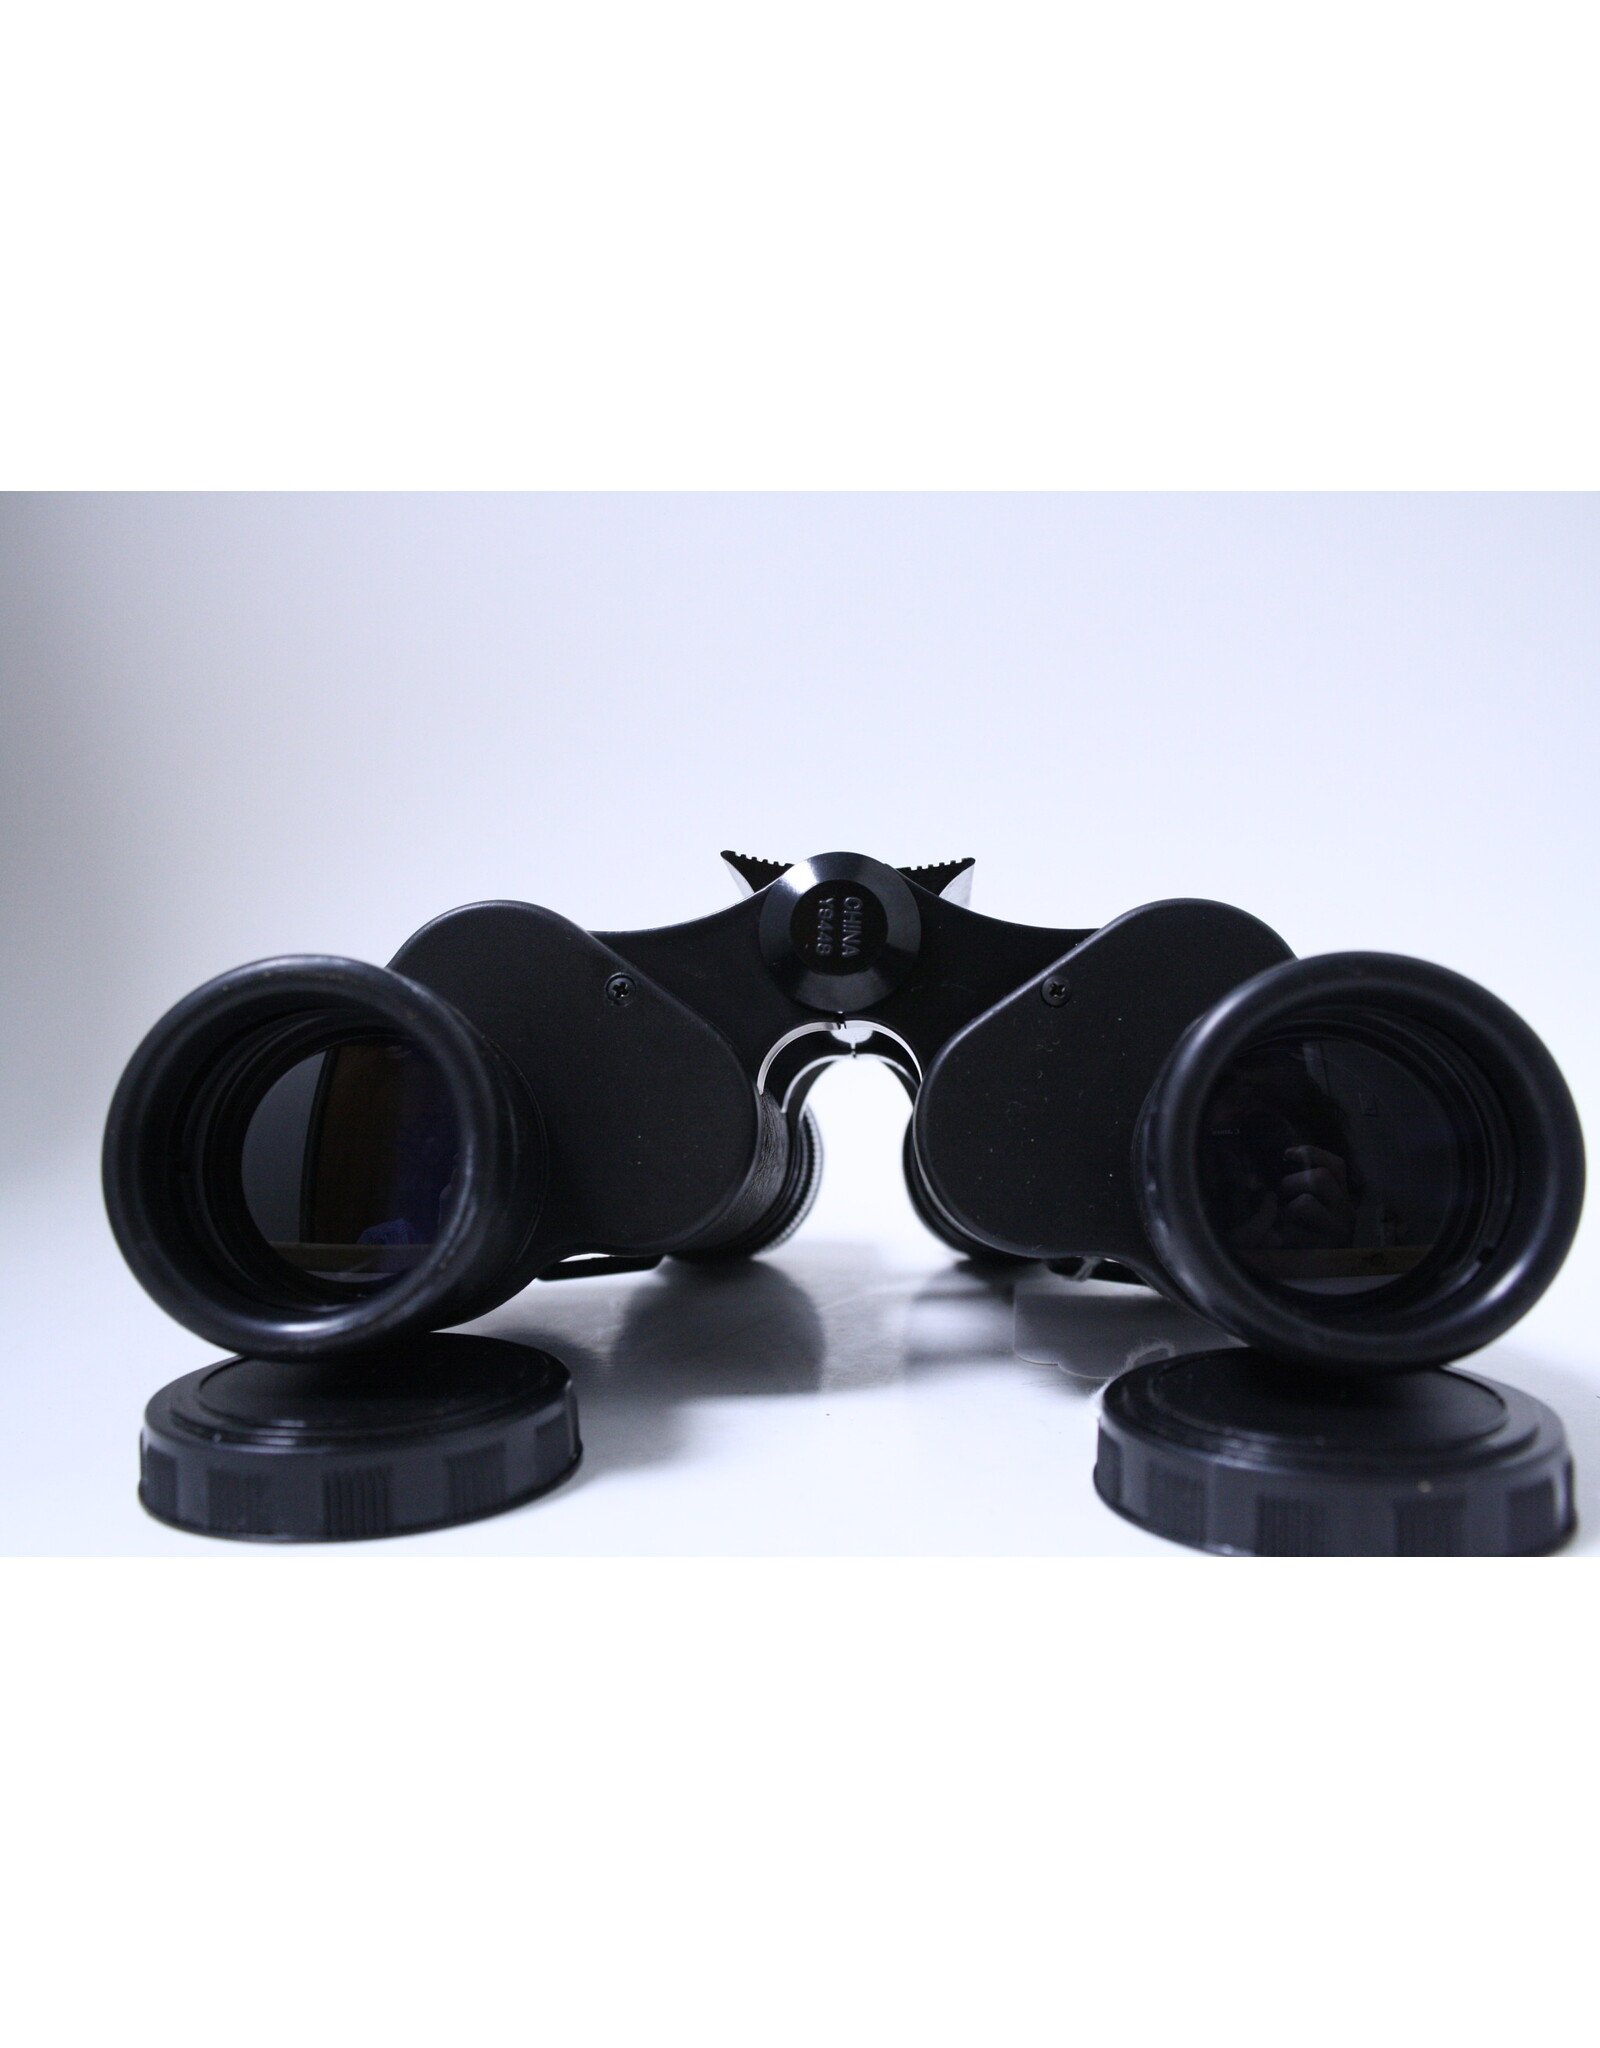 Bushnell 7x35 Insta Focus Binoculars (Pre - Owned)